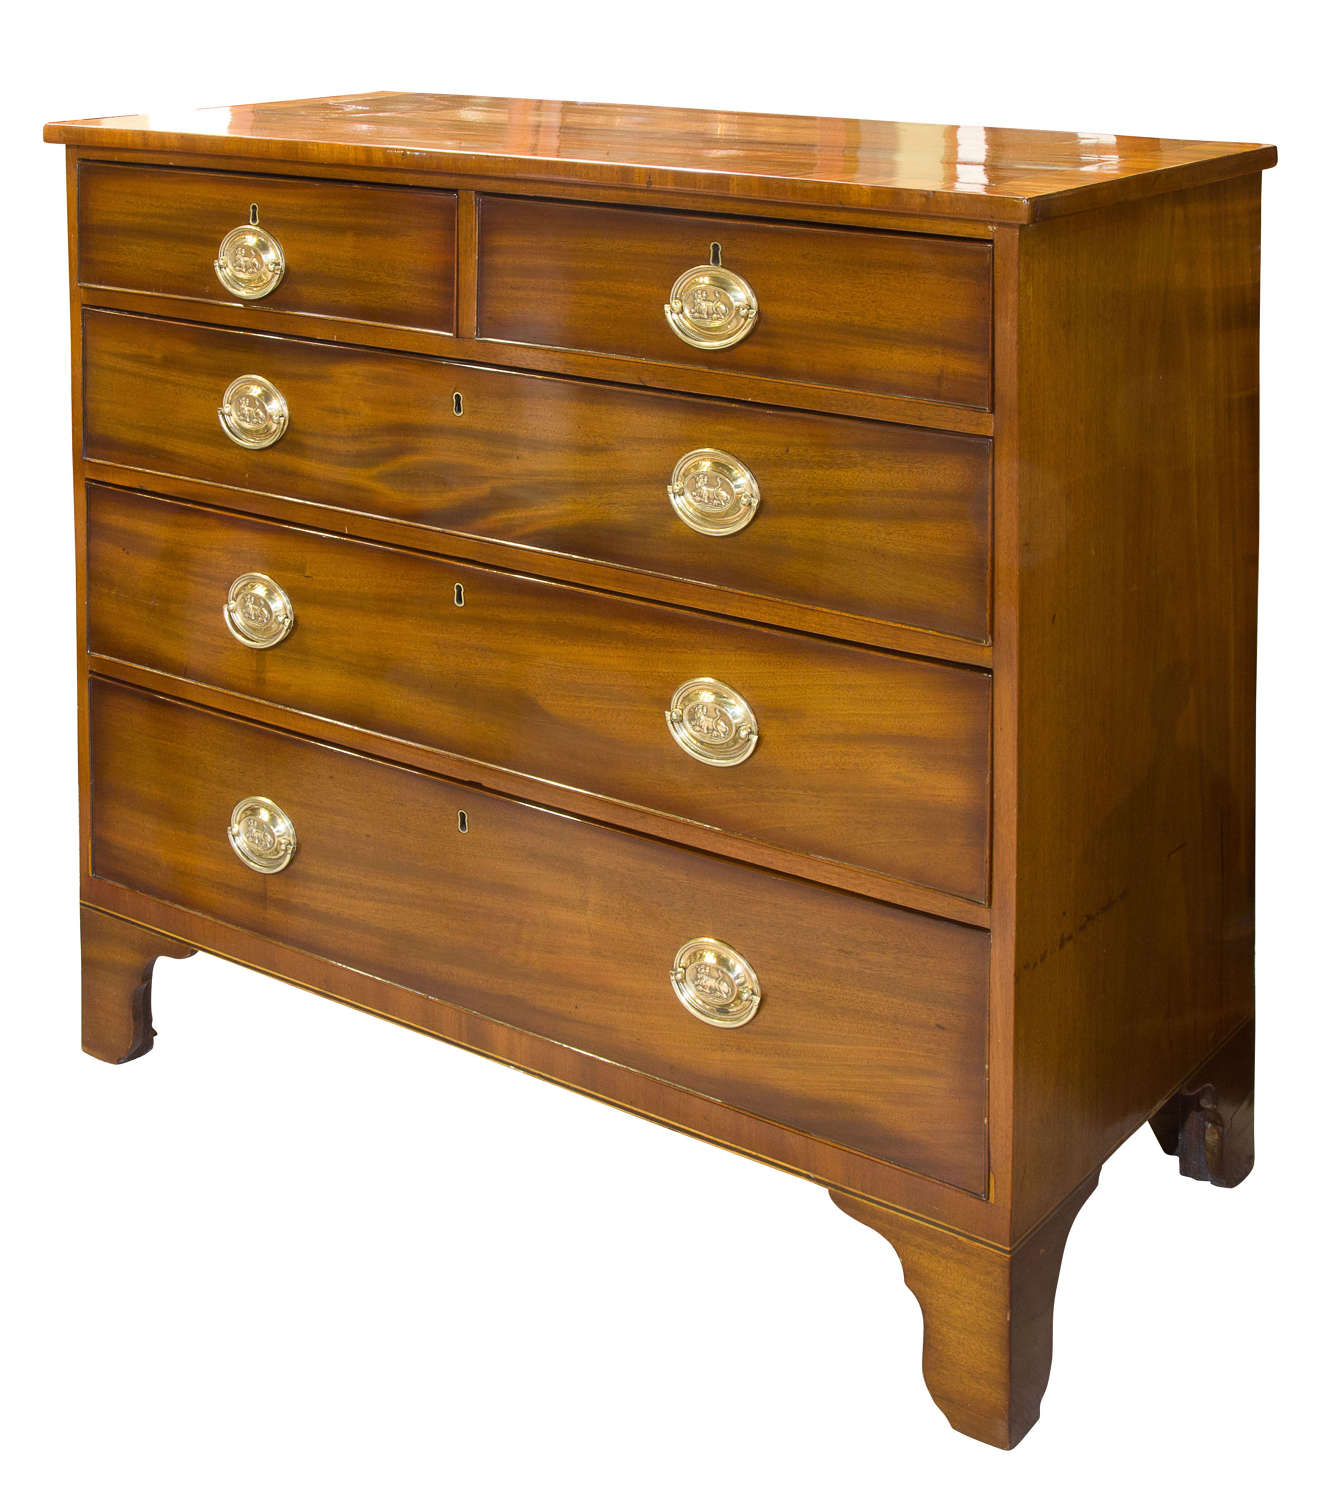 19thc mahogany chest of drawers